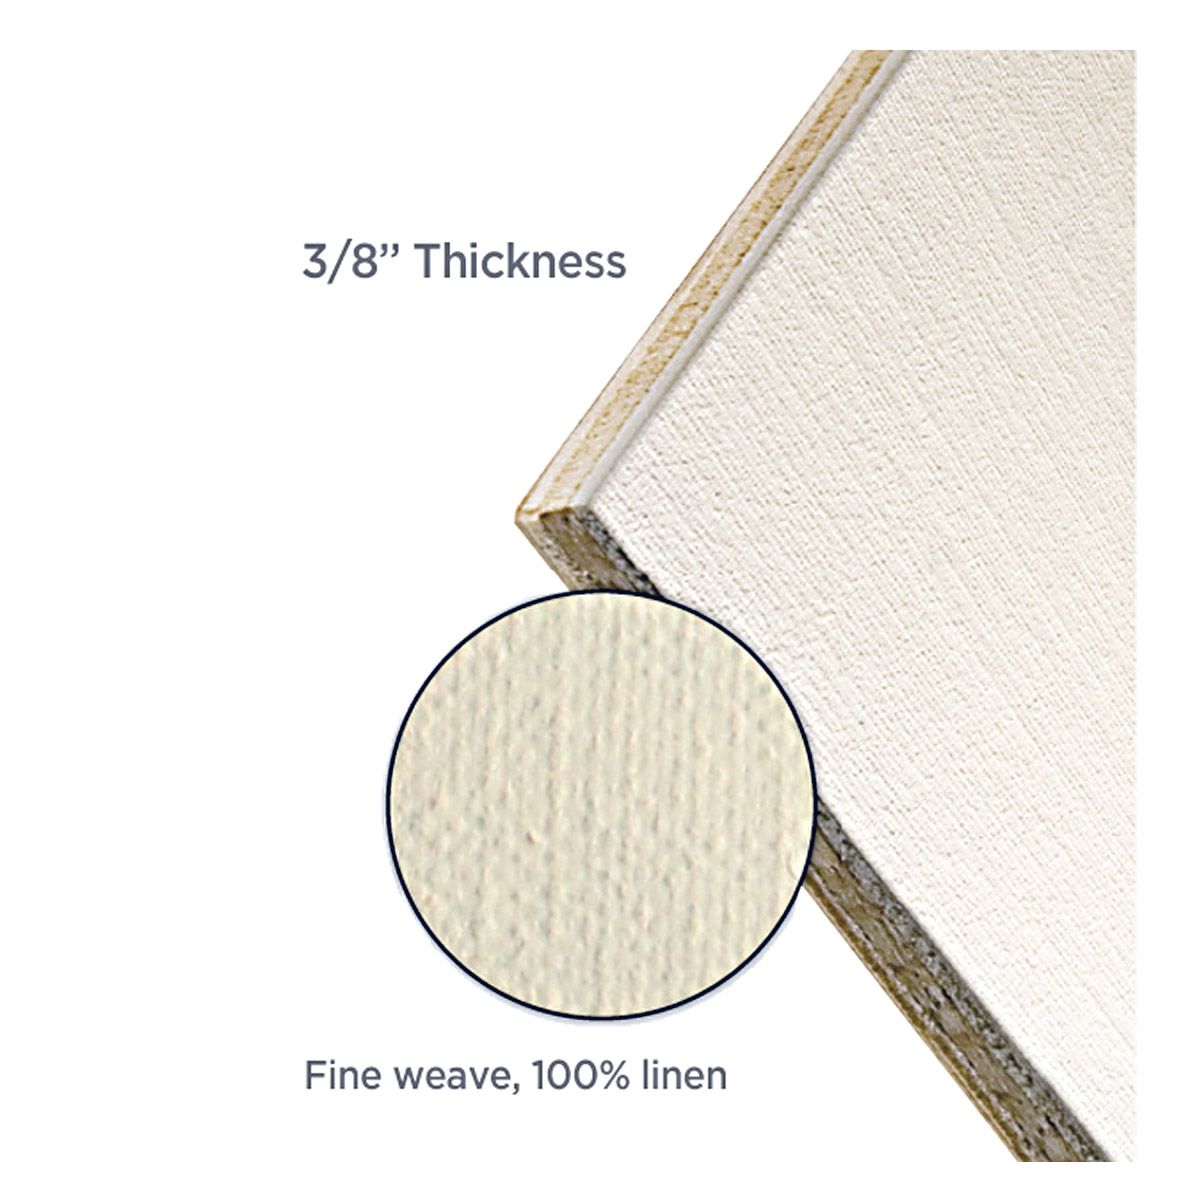 3/8" Thick- Fine Weave 100% Linen